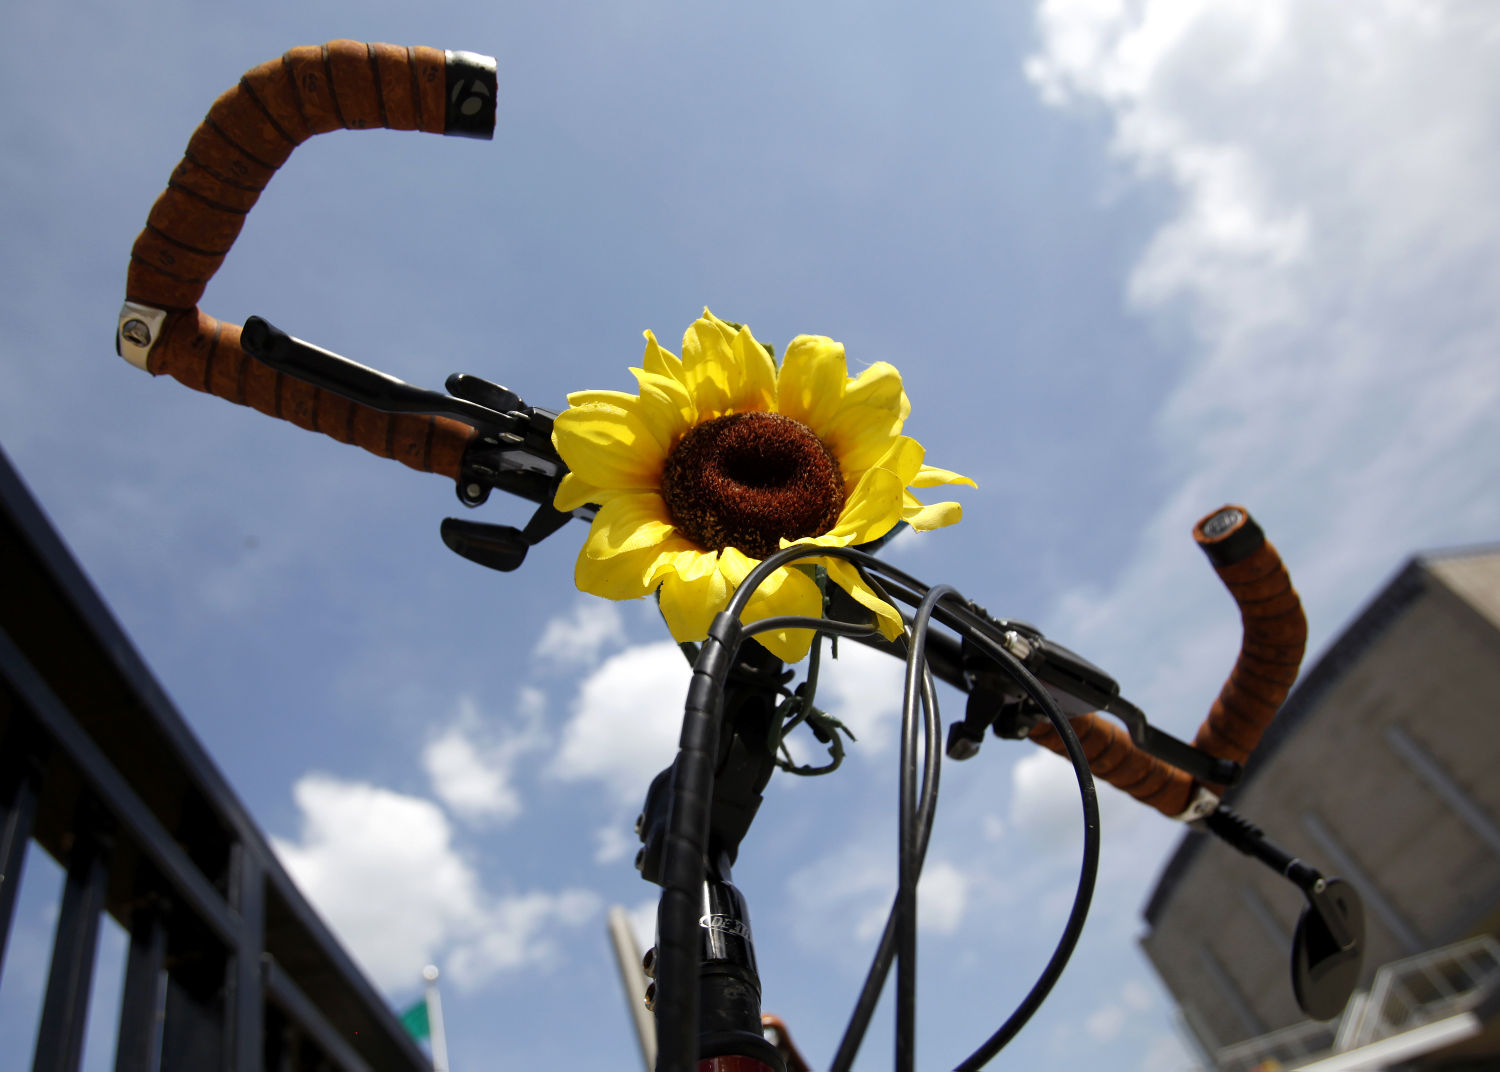 sunflower bikes